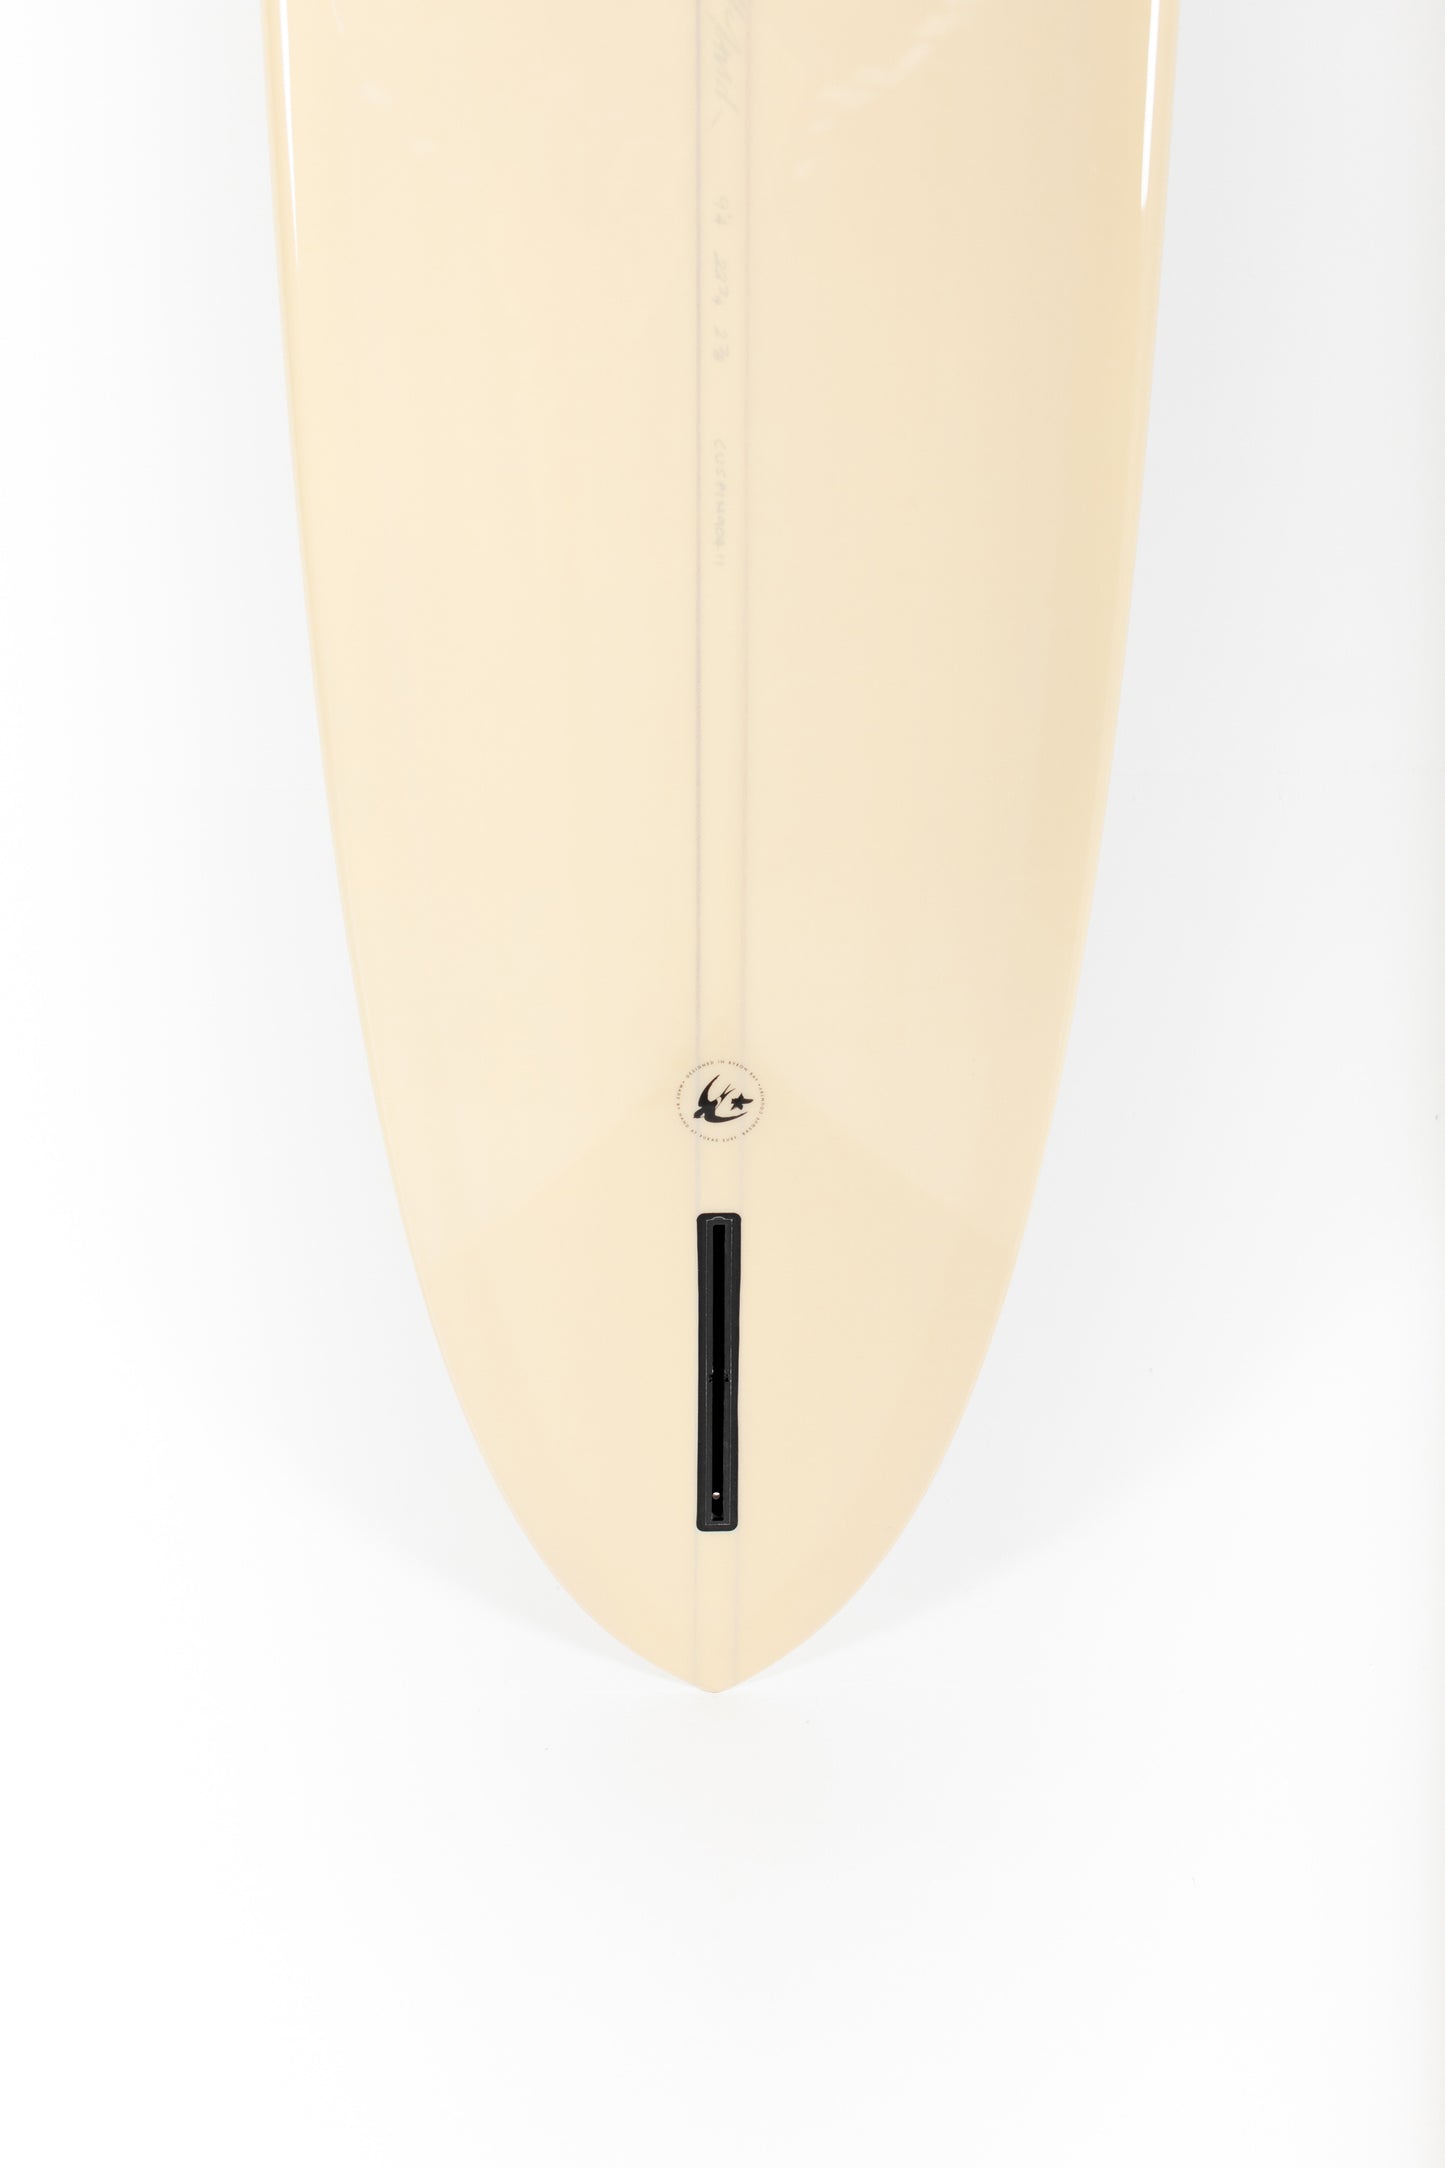 
                  
                    Pukas Surf Shop McTavish Surfboards Pinnacle
                  
                